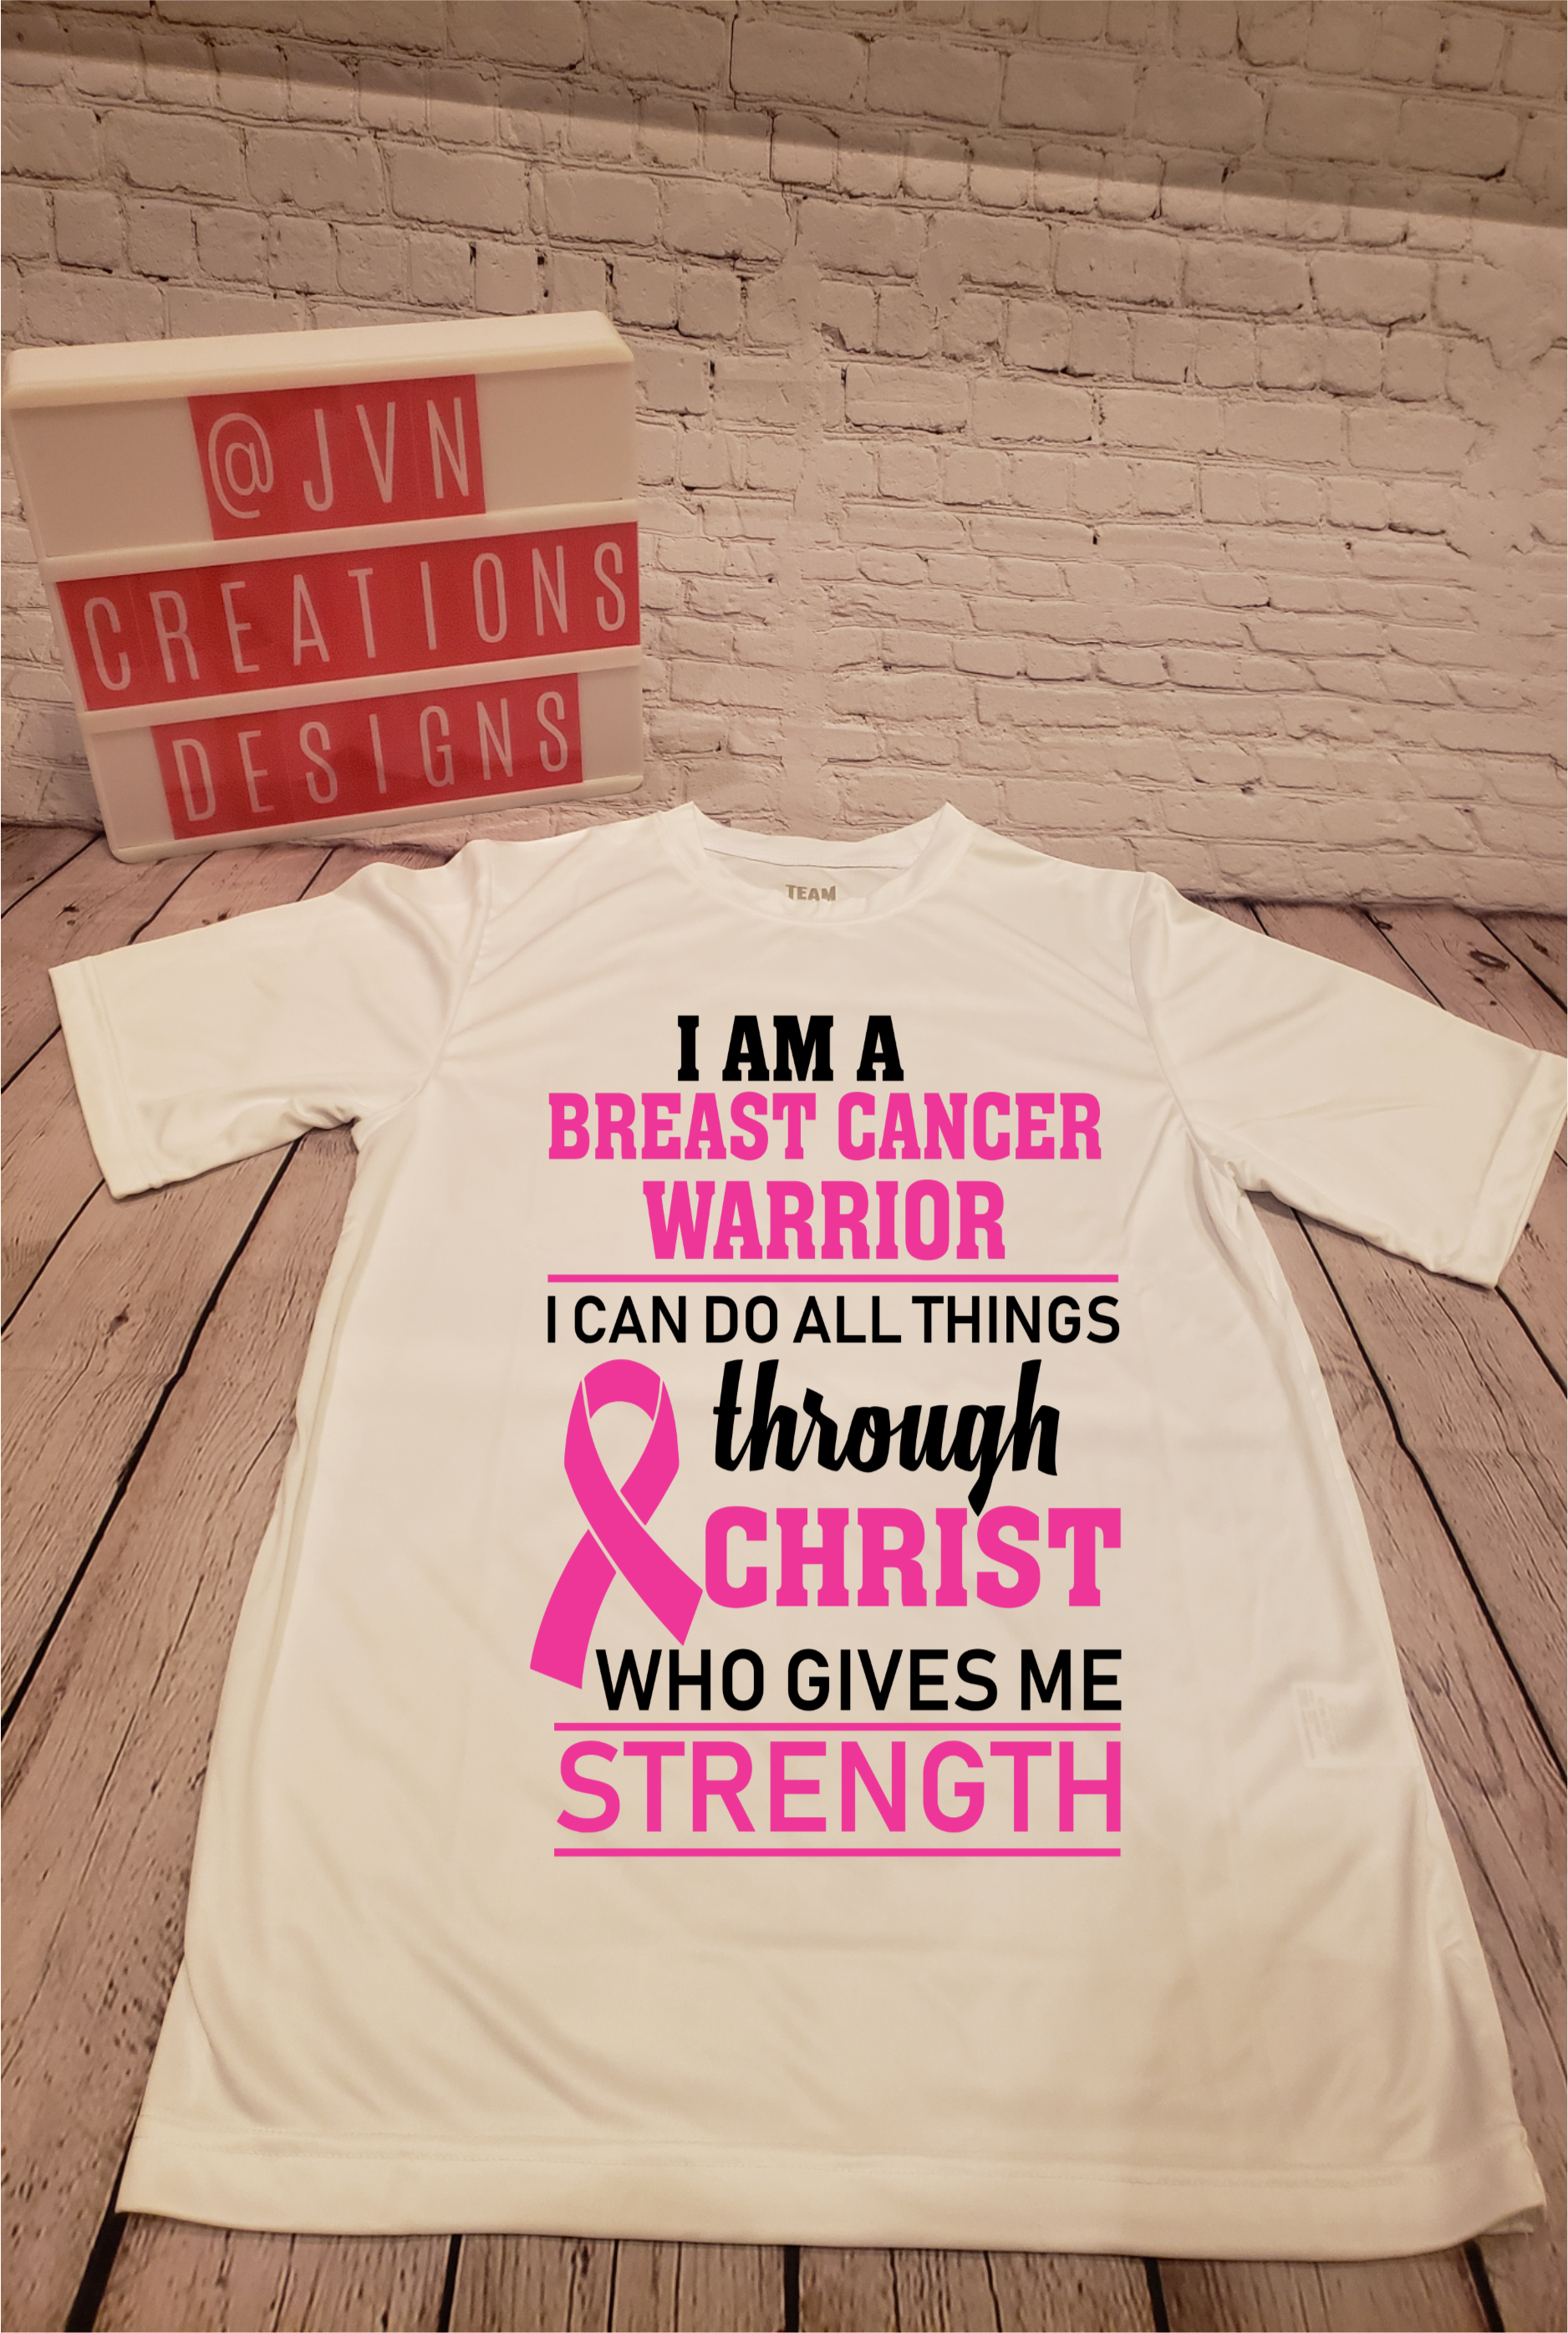 I Am A Breast Cancer Warrior - JVN Creations & Designs